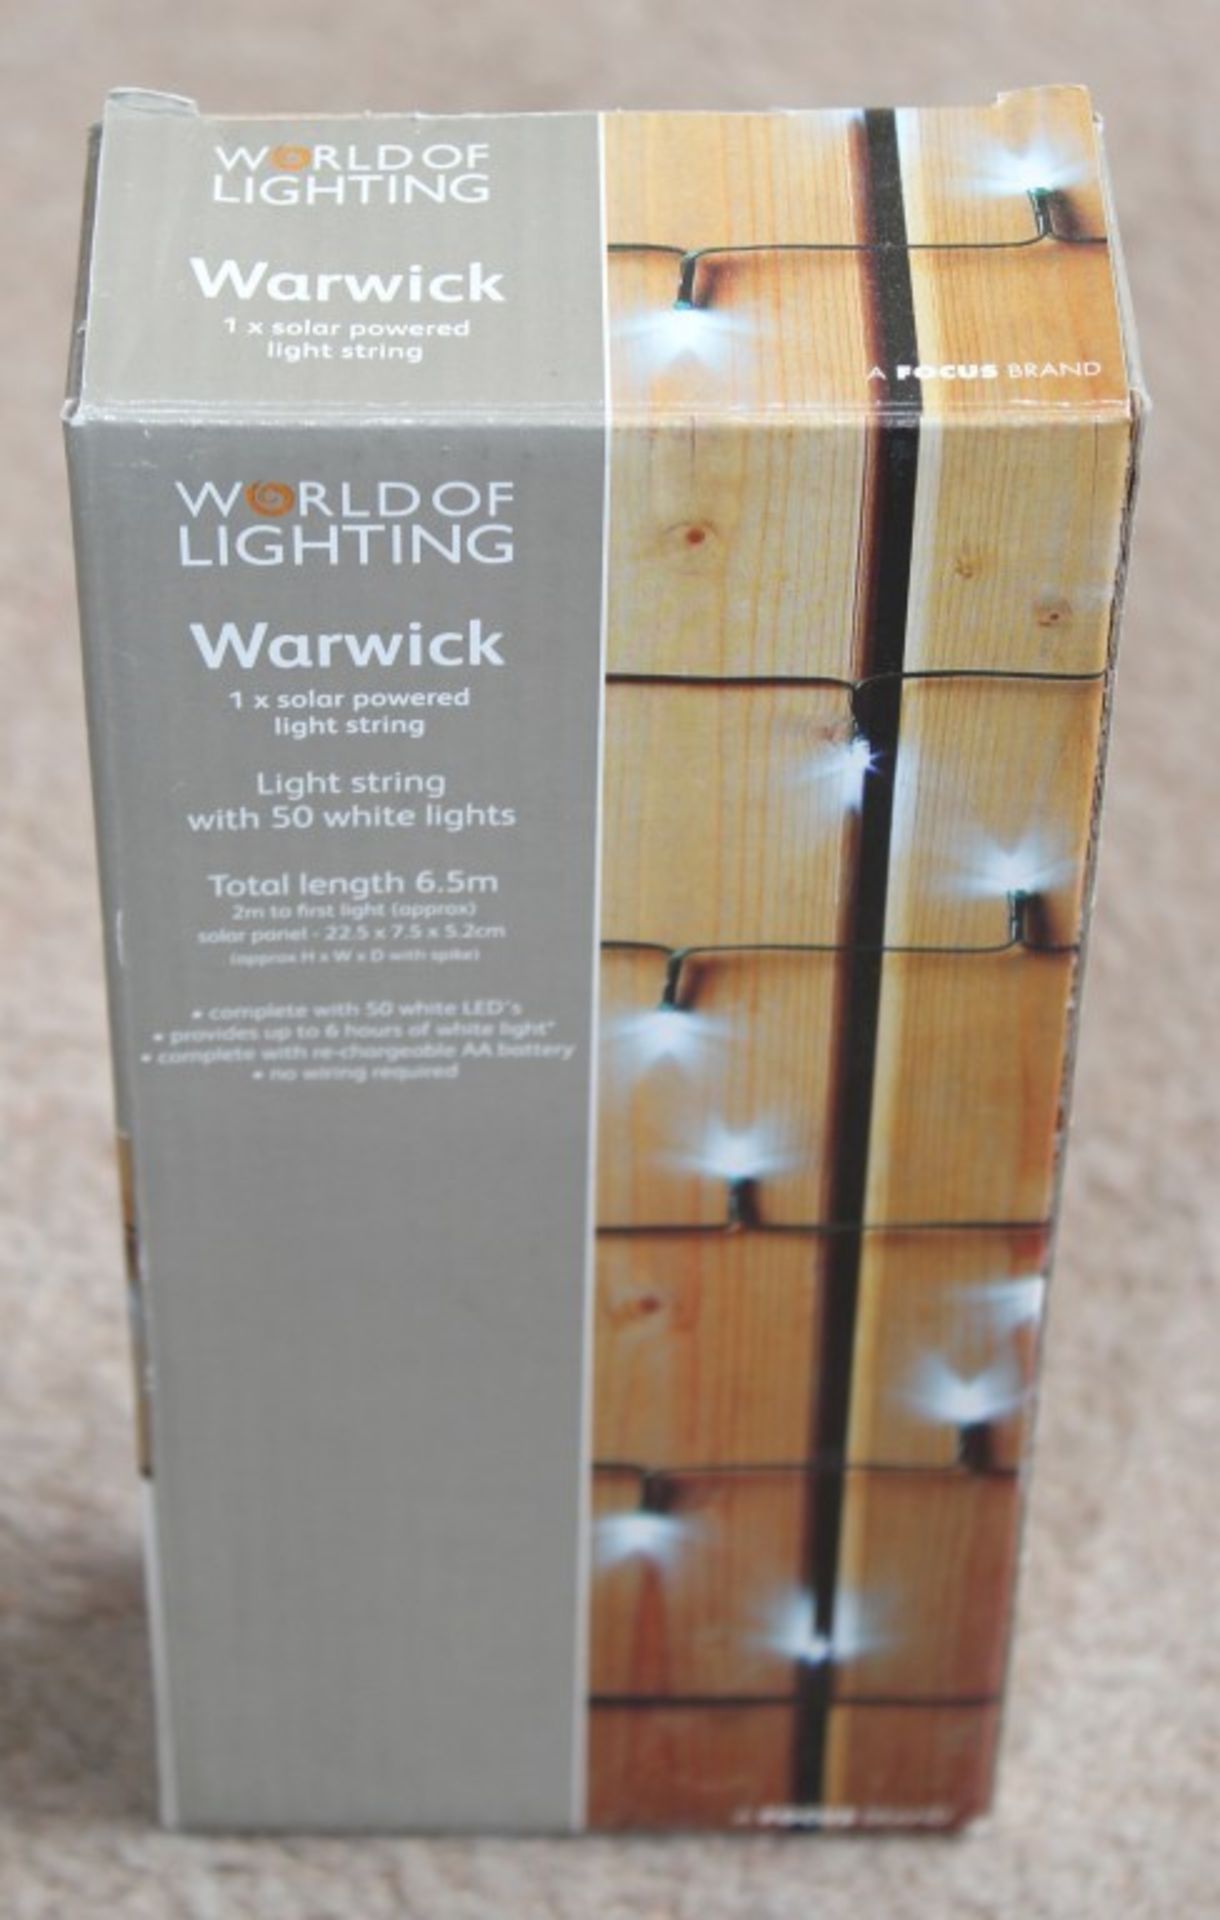 10 x World of Lighting WARWICK Solar Powered LIGHT STRINGS - With 50 White Lights - Total Length 6.5